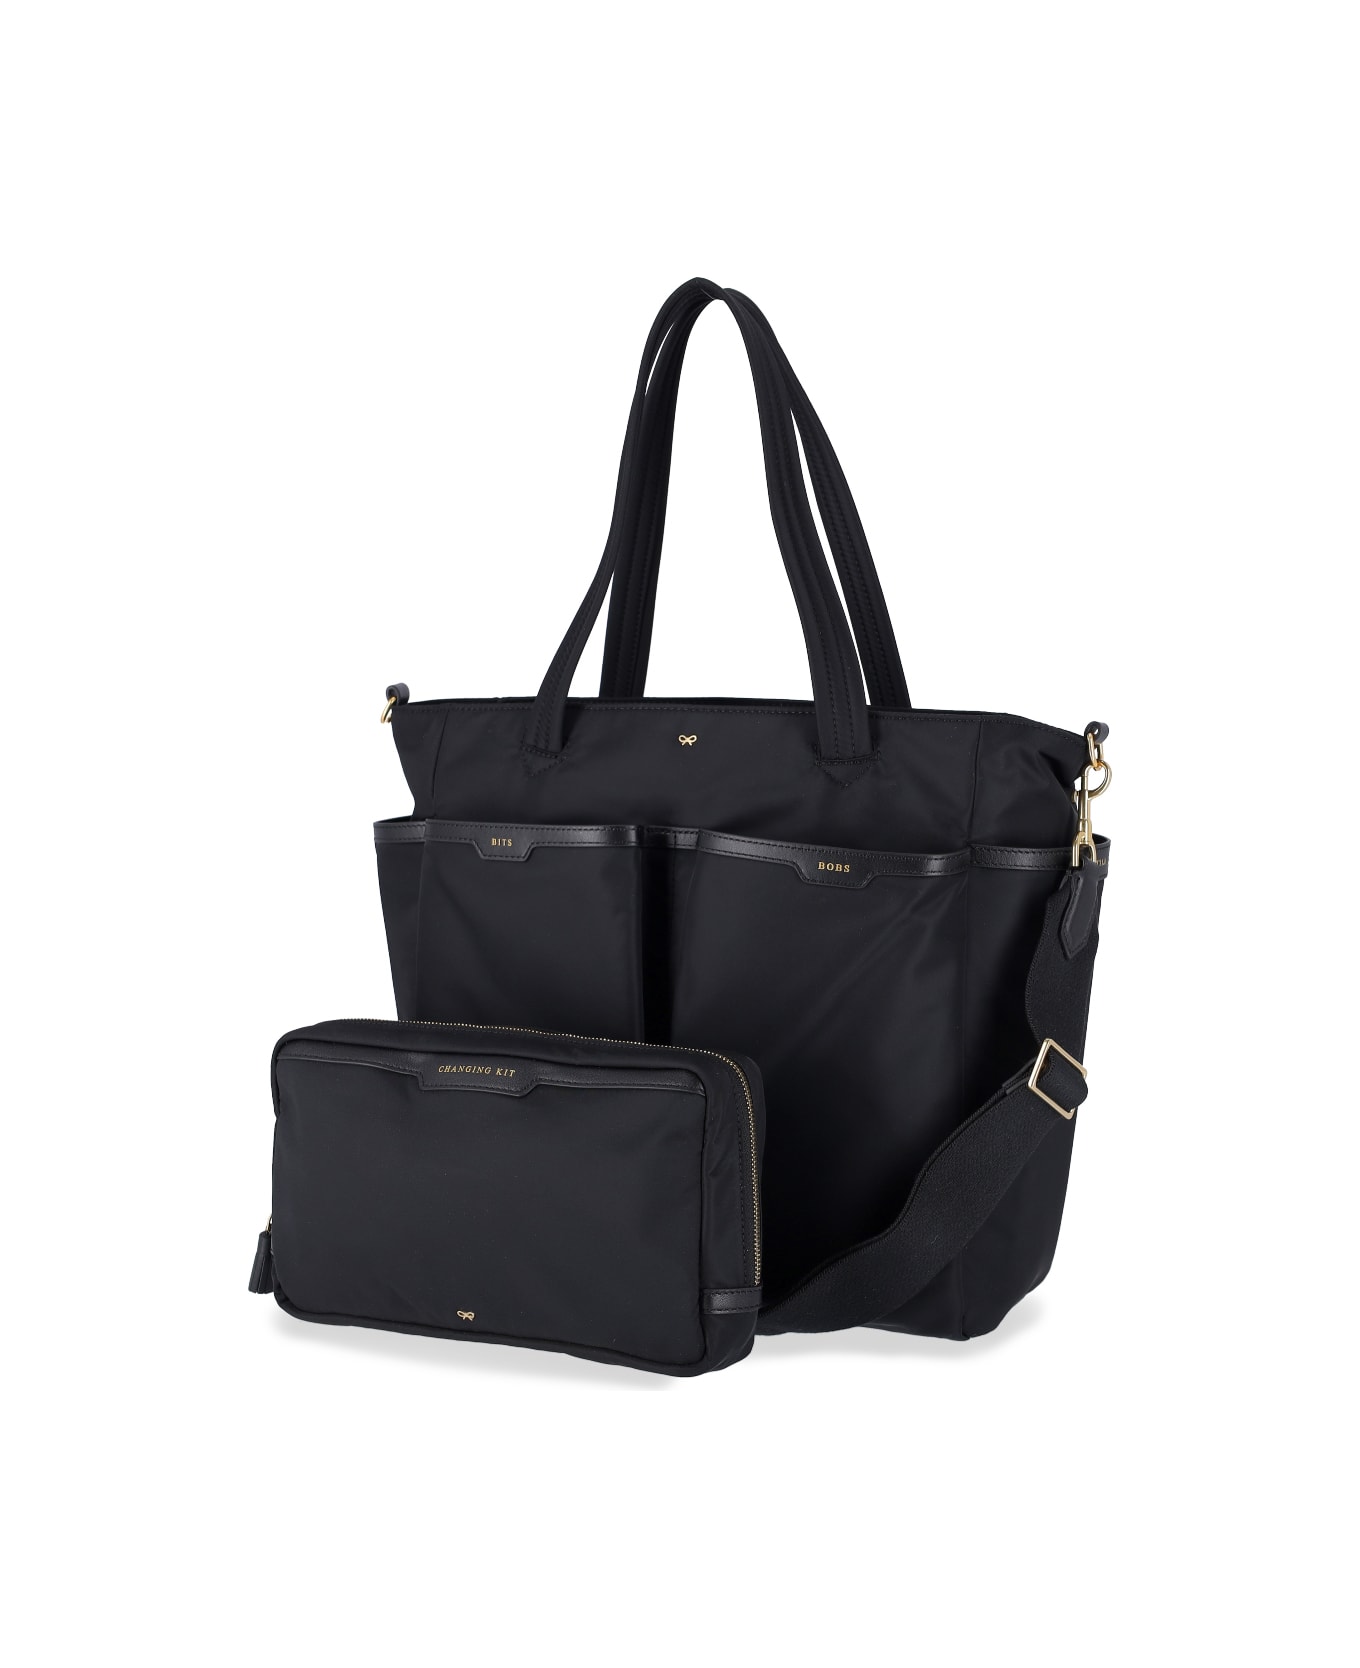 Anya Hindmarch Tote Bag 'multi-pocket' - Black  